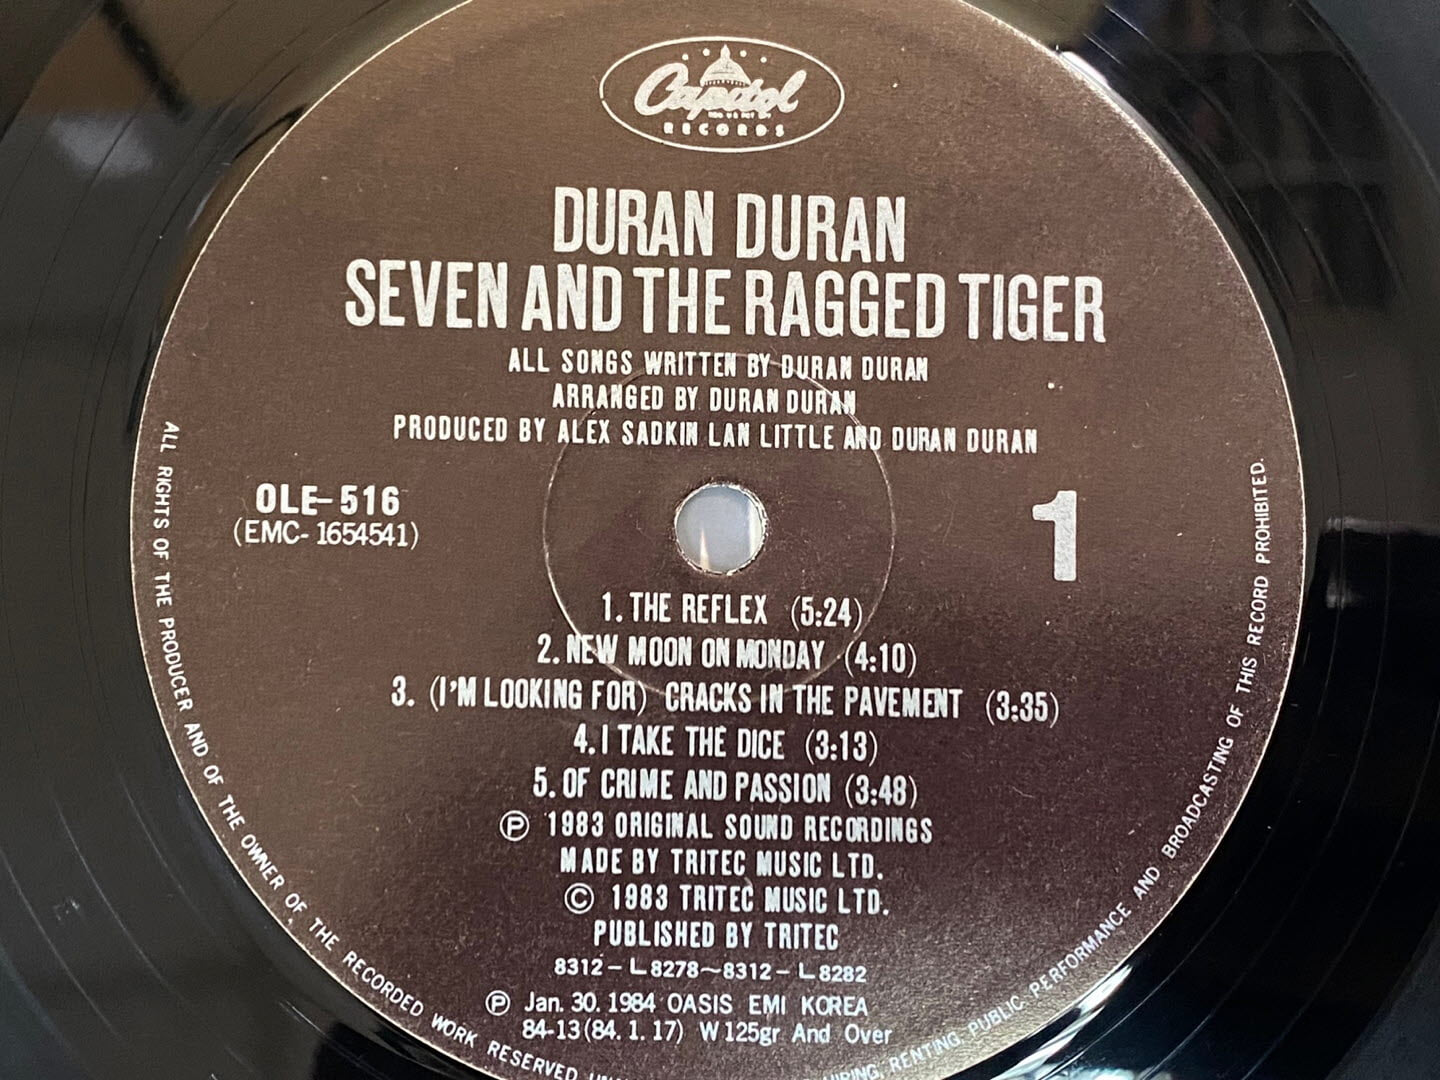 [LP] 듀란듀란 - Duran Duran - Seven And The Ragged Tiger LP [오아시스-라이센스반]